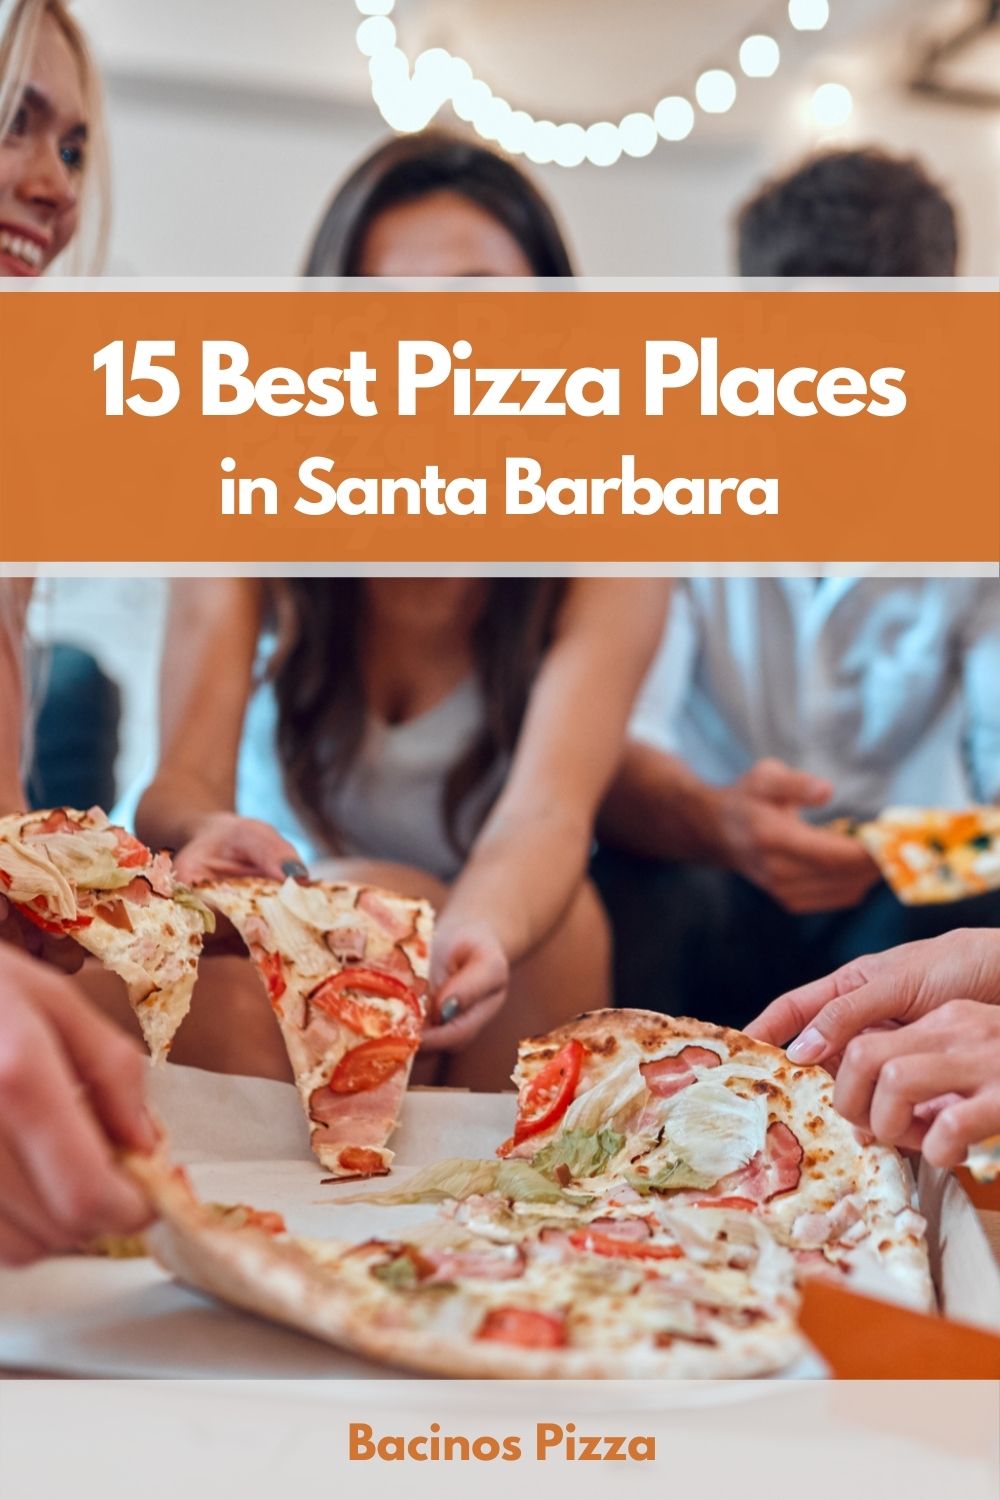 15 Best Pizza Places in Santa Barbara pin 2